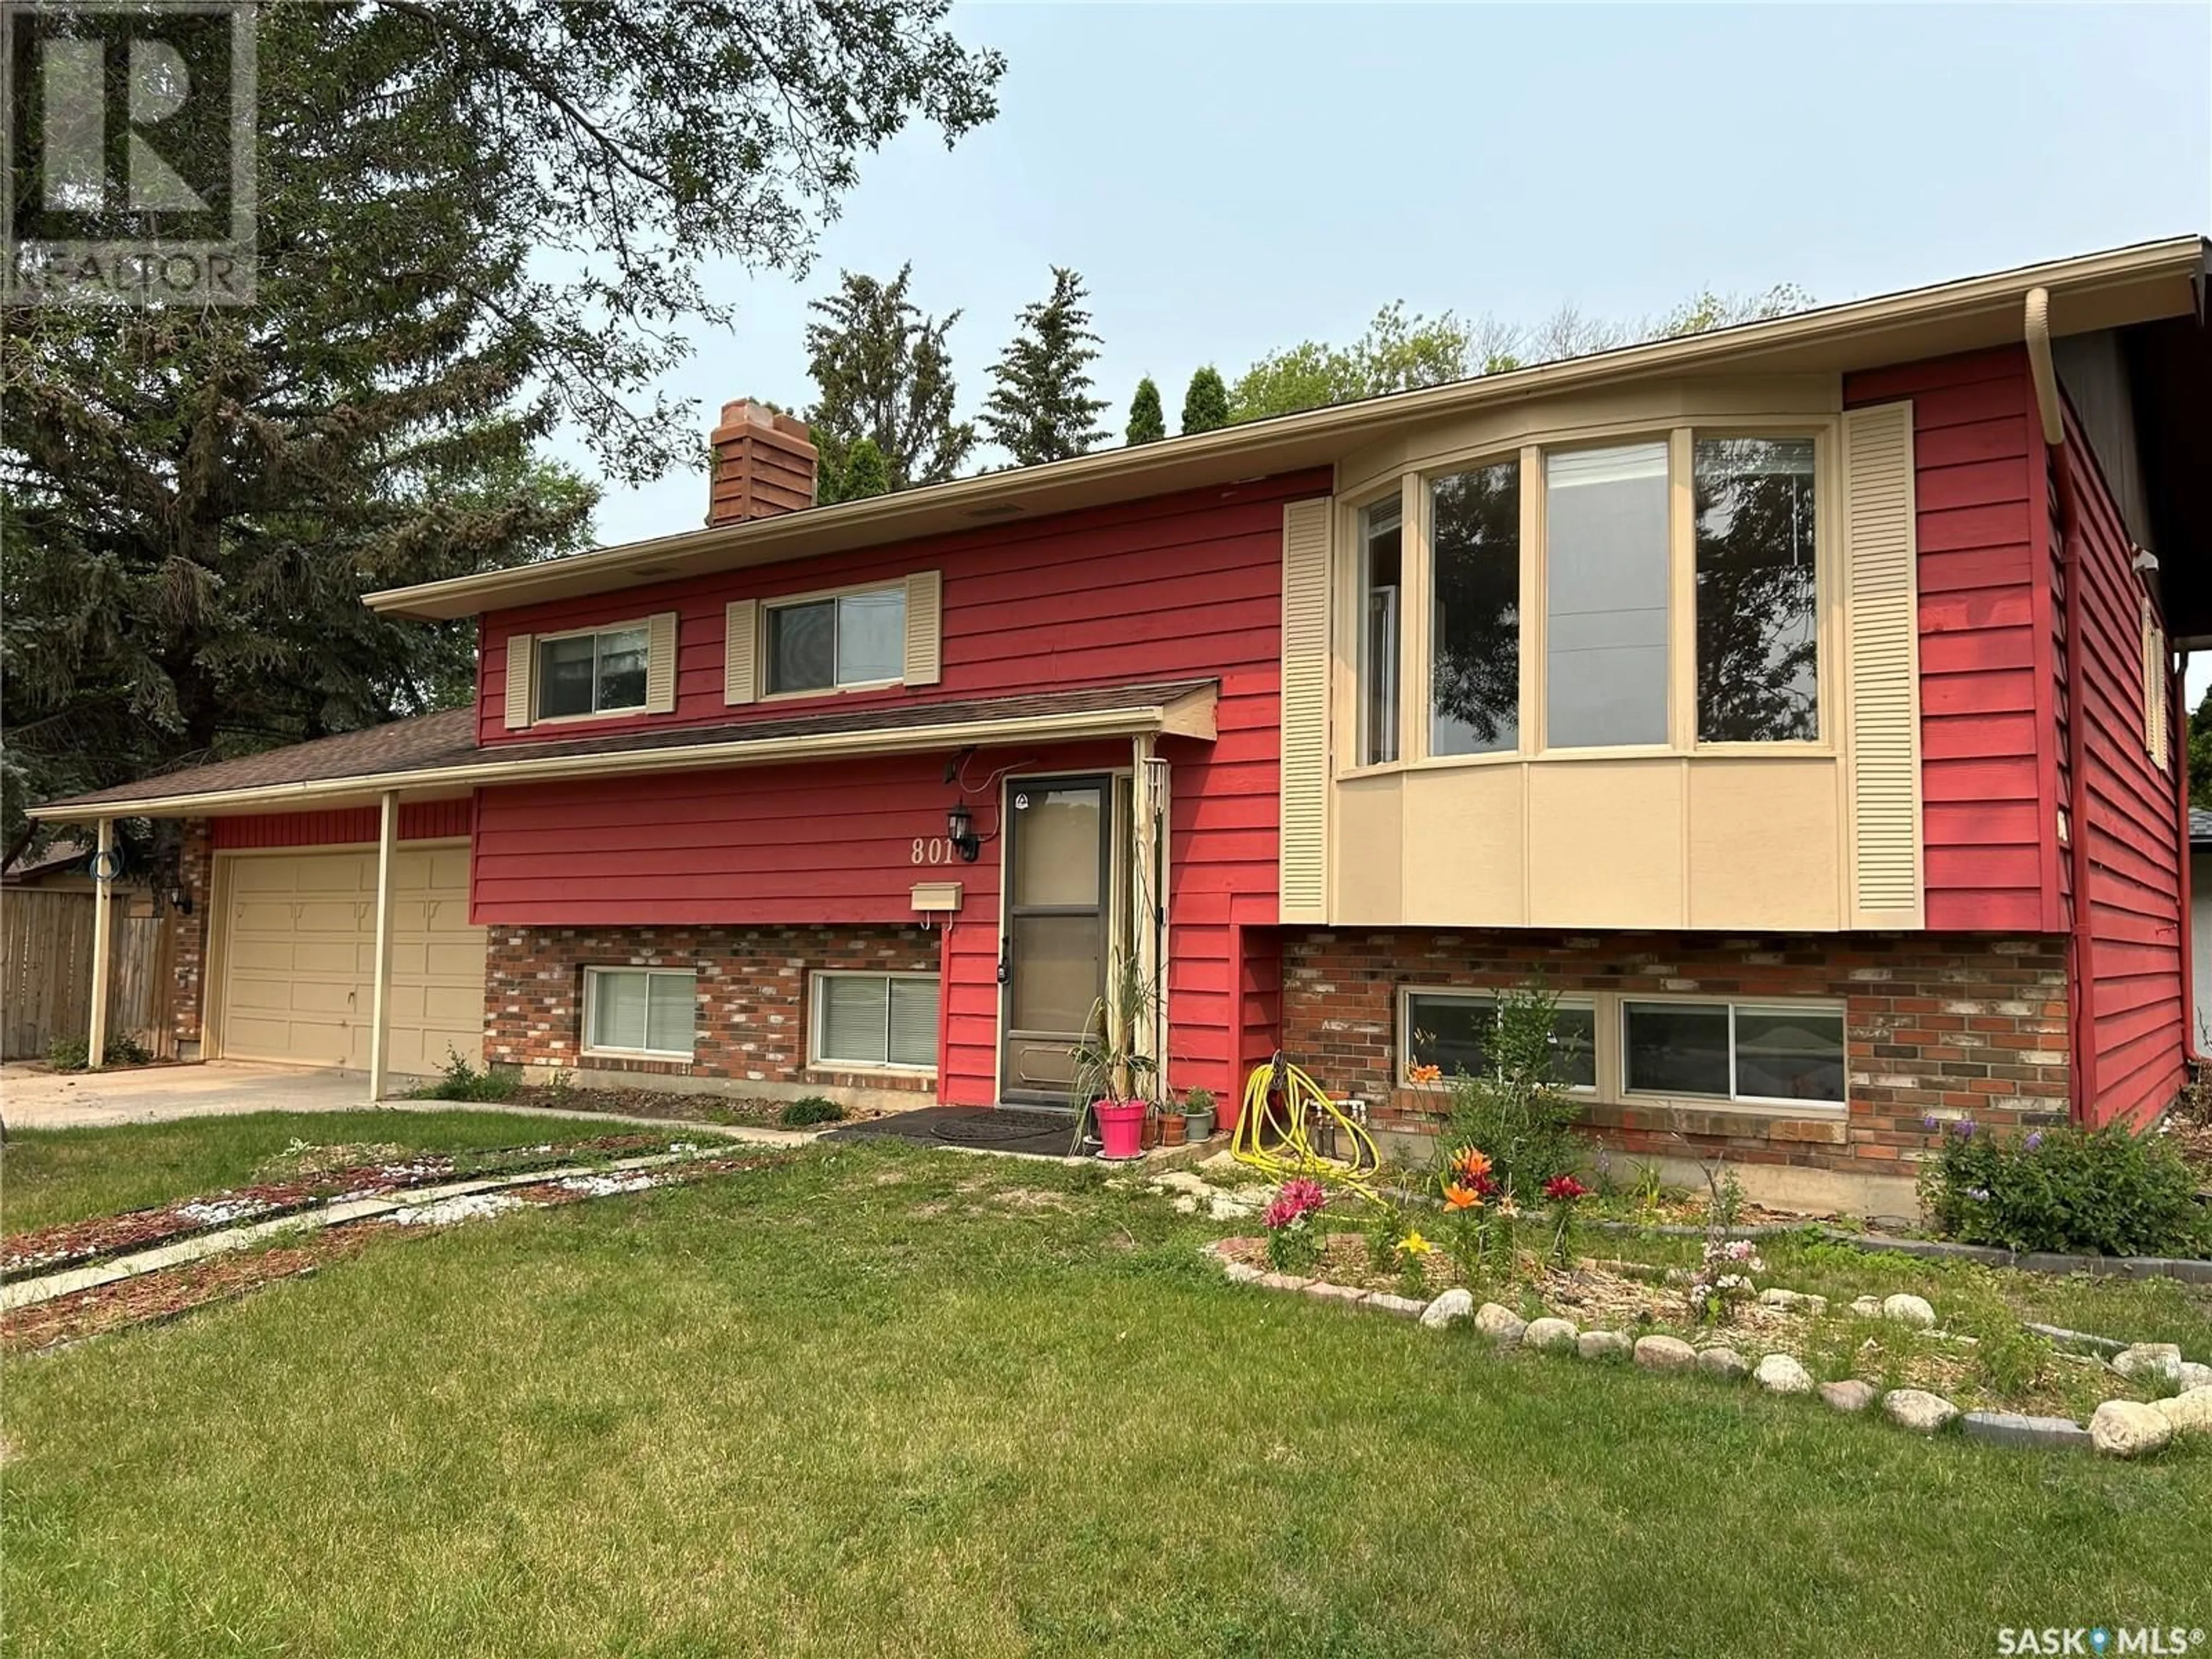 Home with vinyl exterior material for 801 V AVENUE N, Saskatoon Saskatchewan S7L3E9